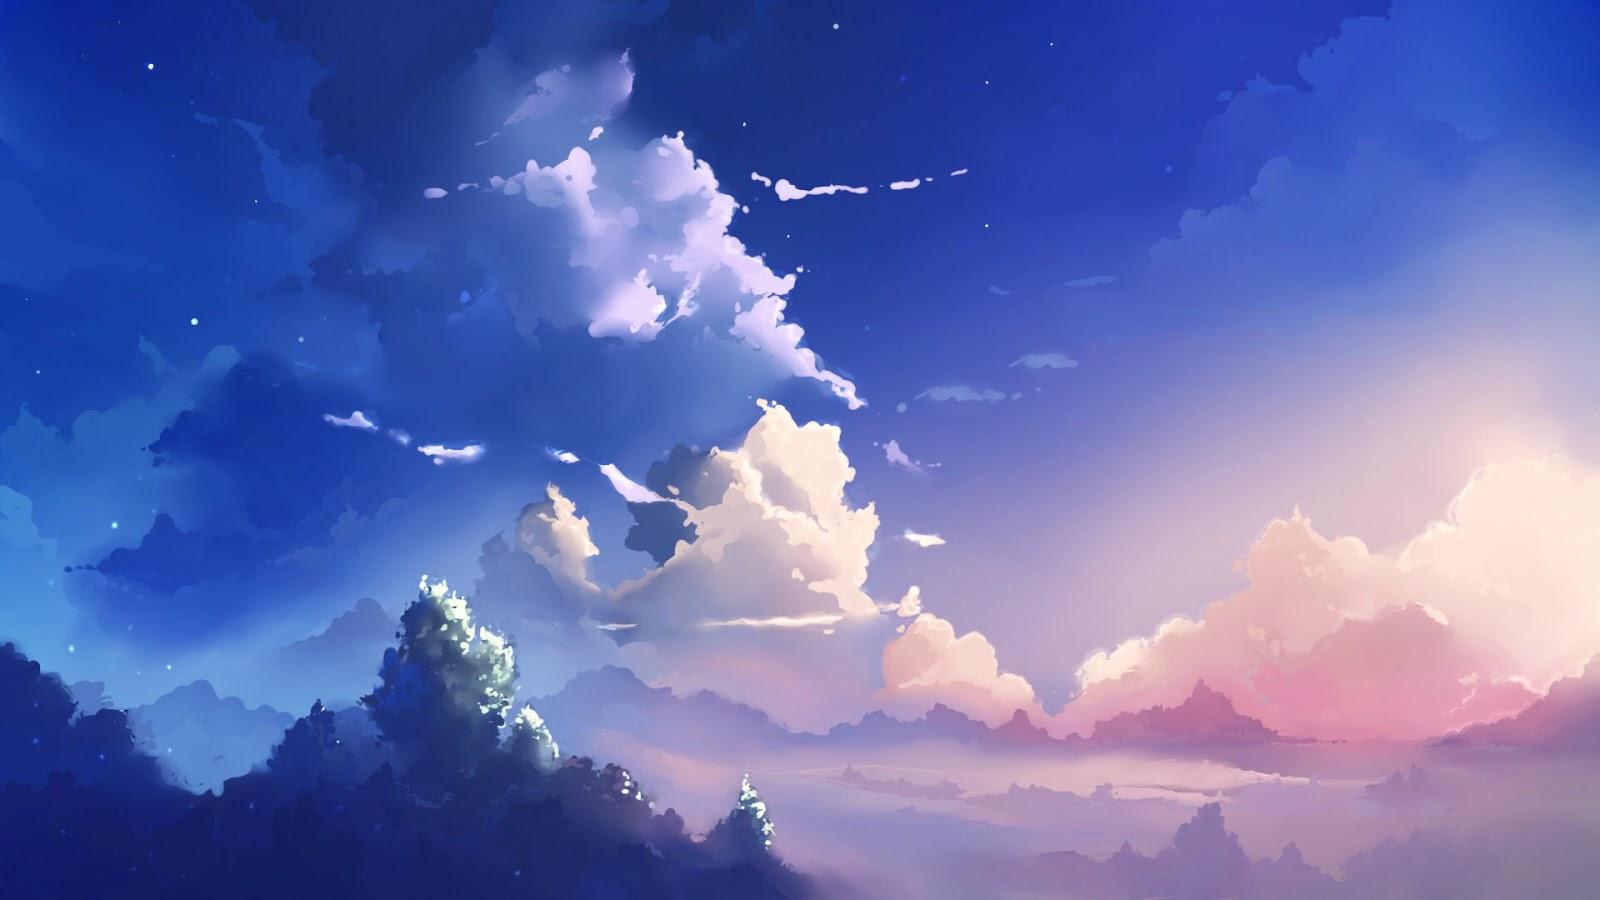 Free download Anime Landscape Sky Anime Landscape 1600x900